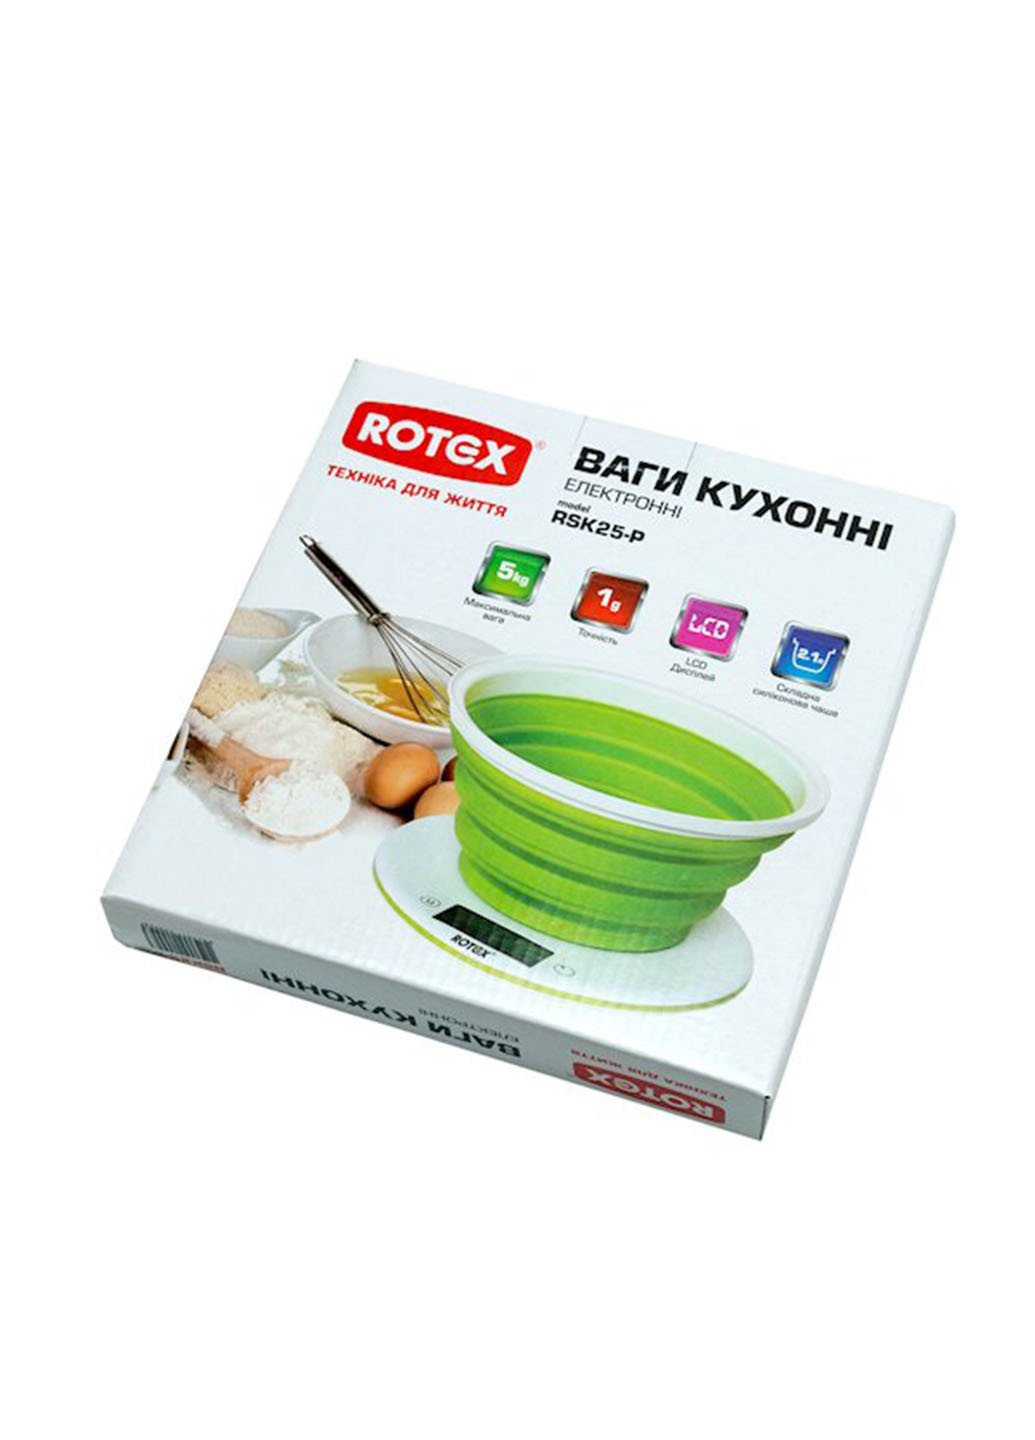 Ваги кухонні Rotex rsk25-p (138094026)